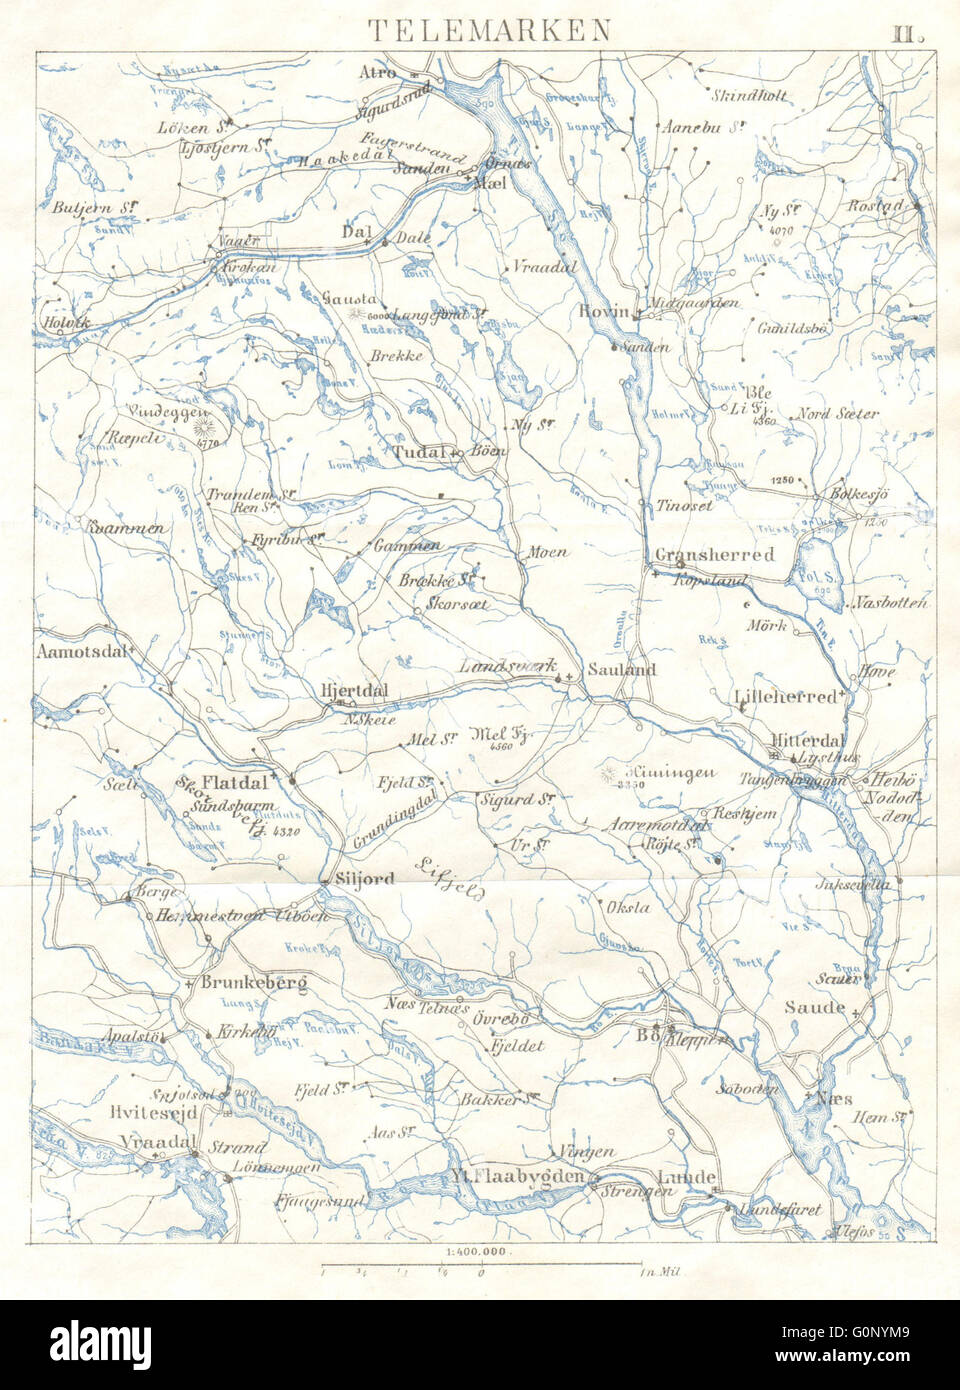 La Norvegia. Telemarken, 1896 Mappa antichi Foto Stock